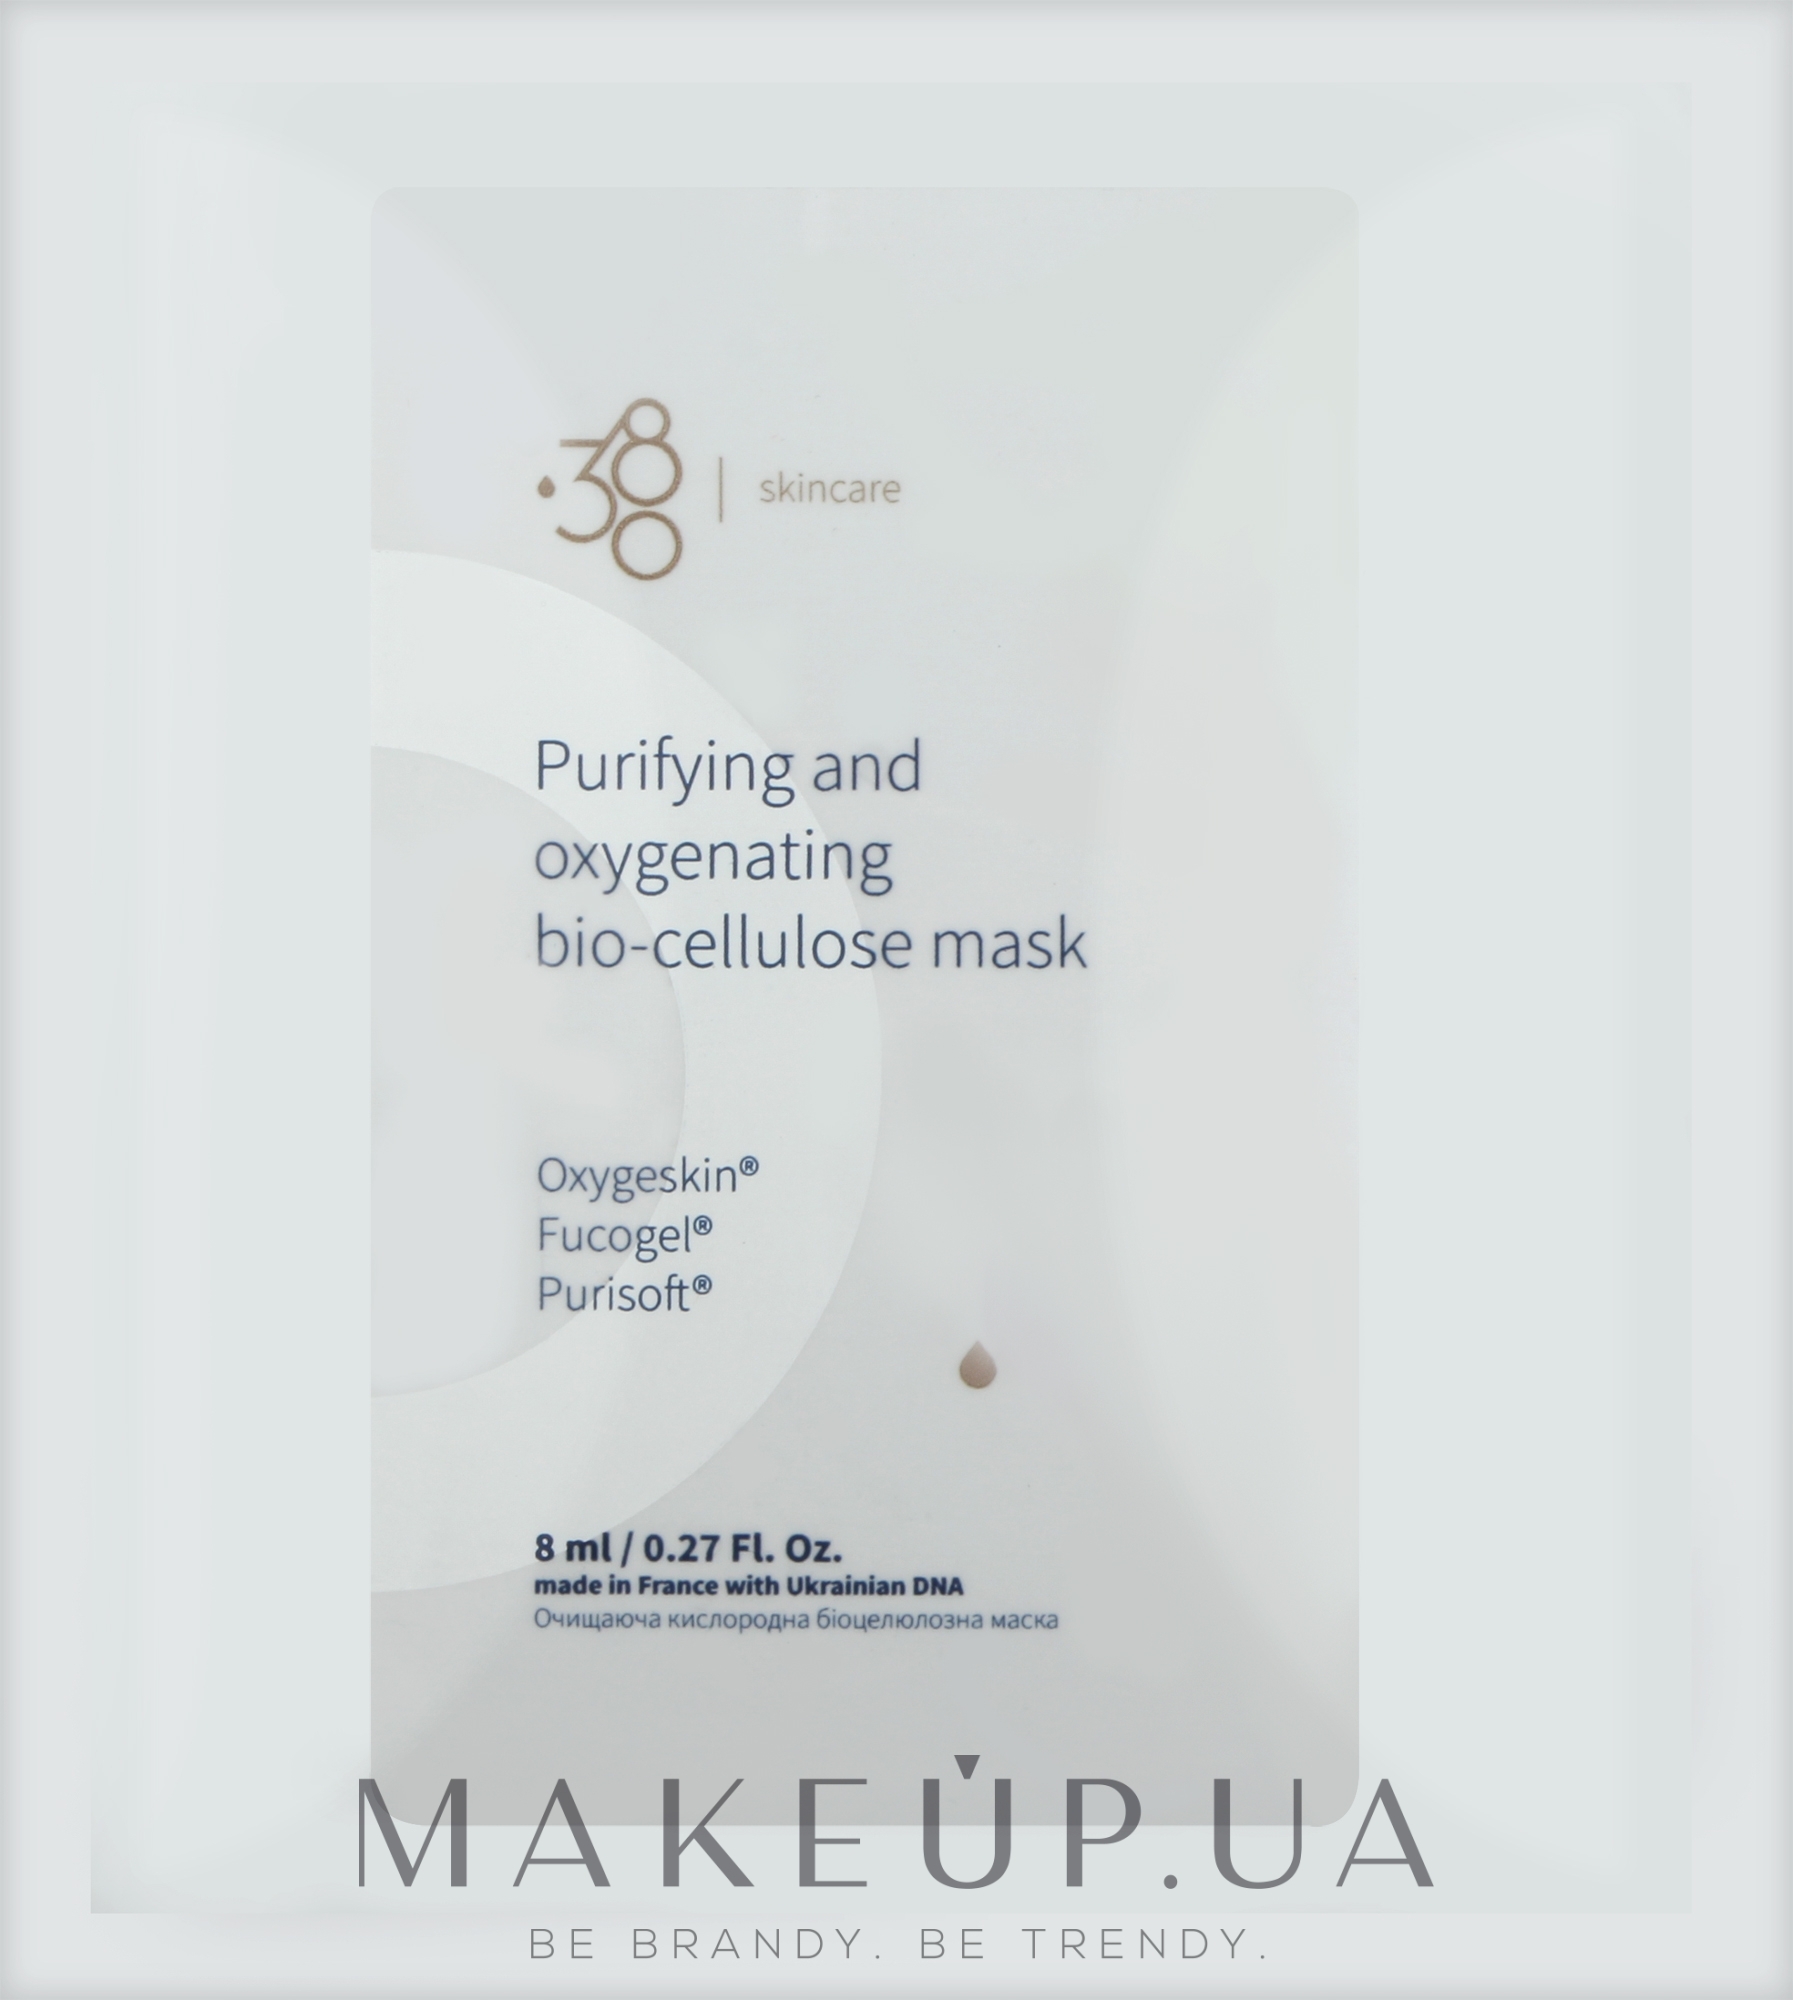 Очищаюча кислородна біоцелюлозна маска для обличчя - 380 Skincare Purifying & Oxygenating Bio-Cellulose Mask — фото 8ml